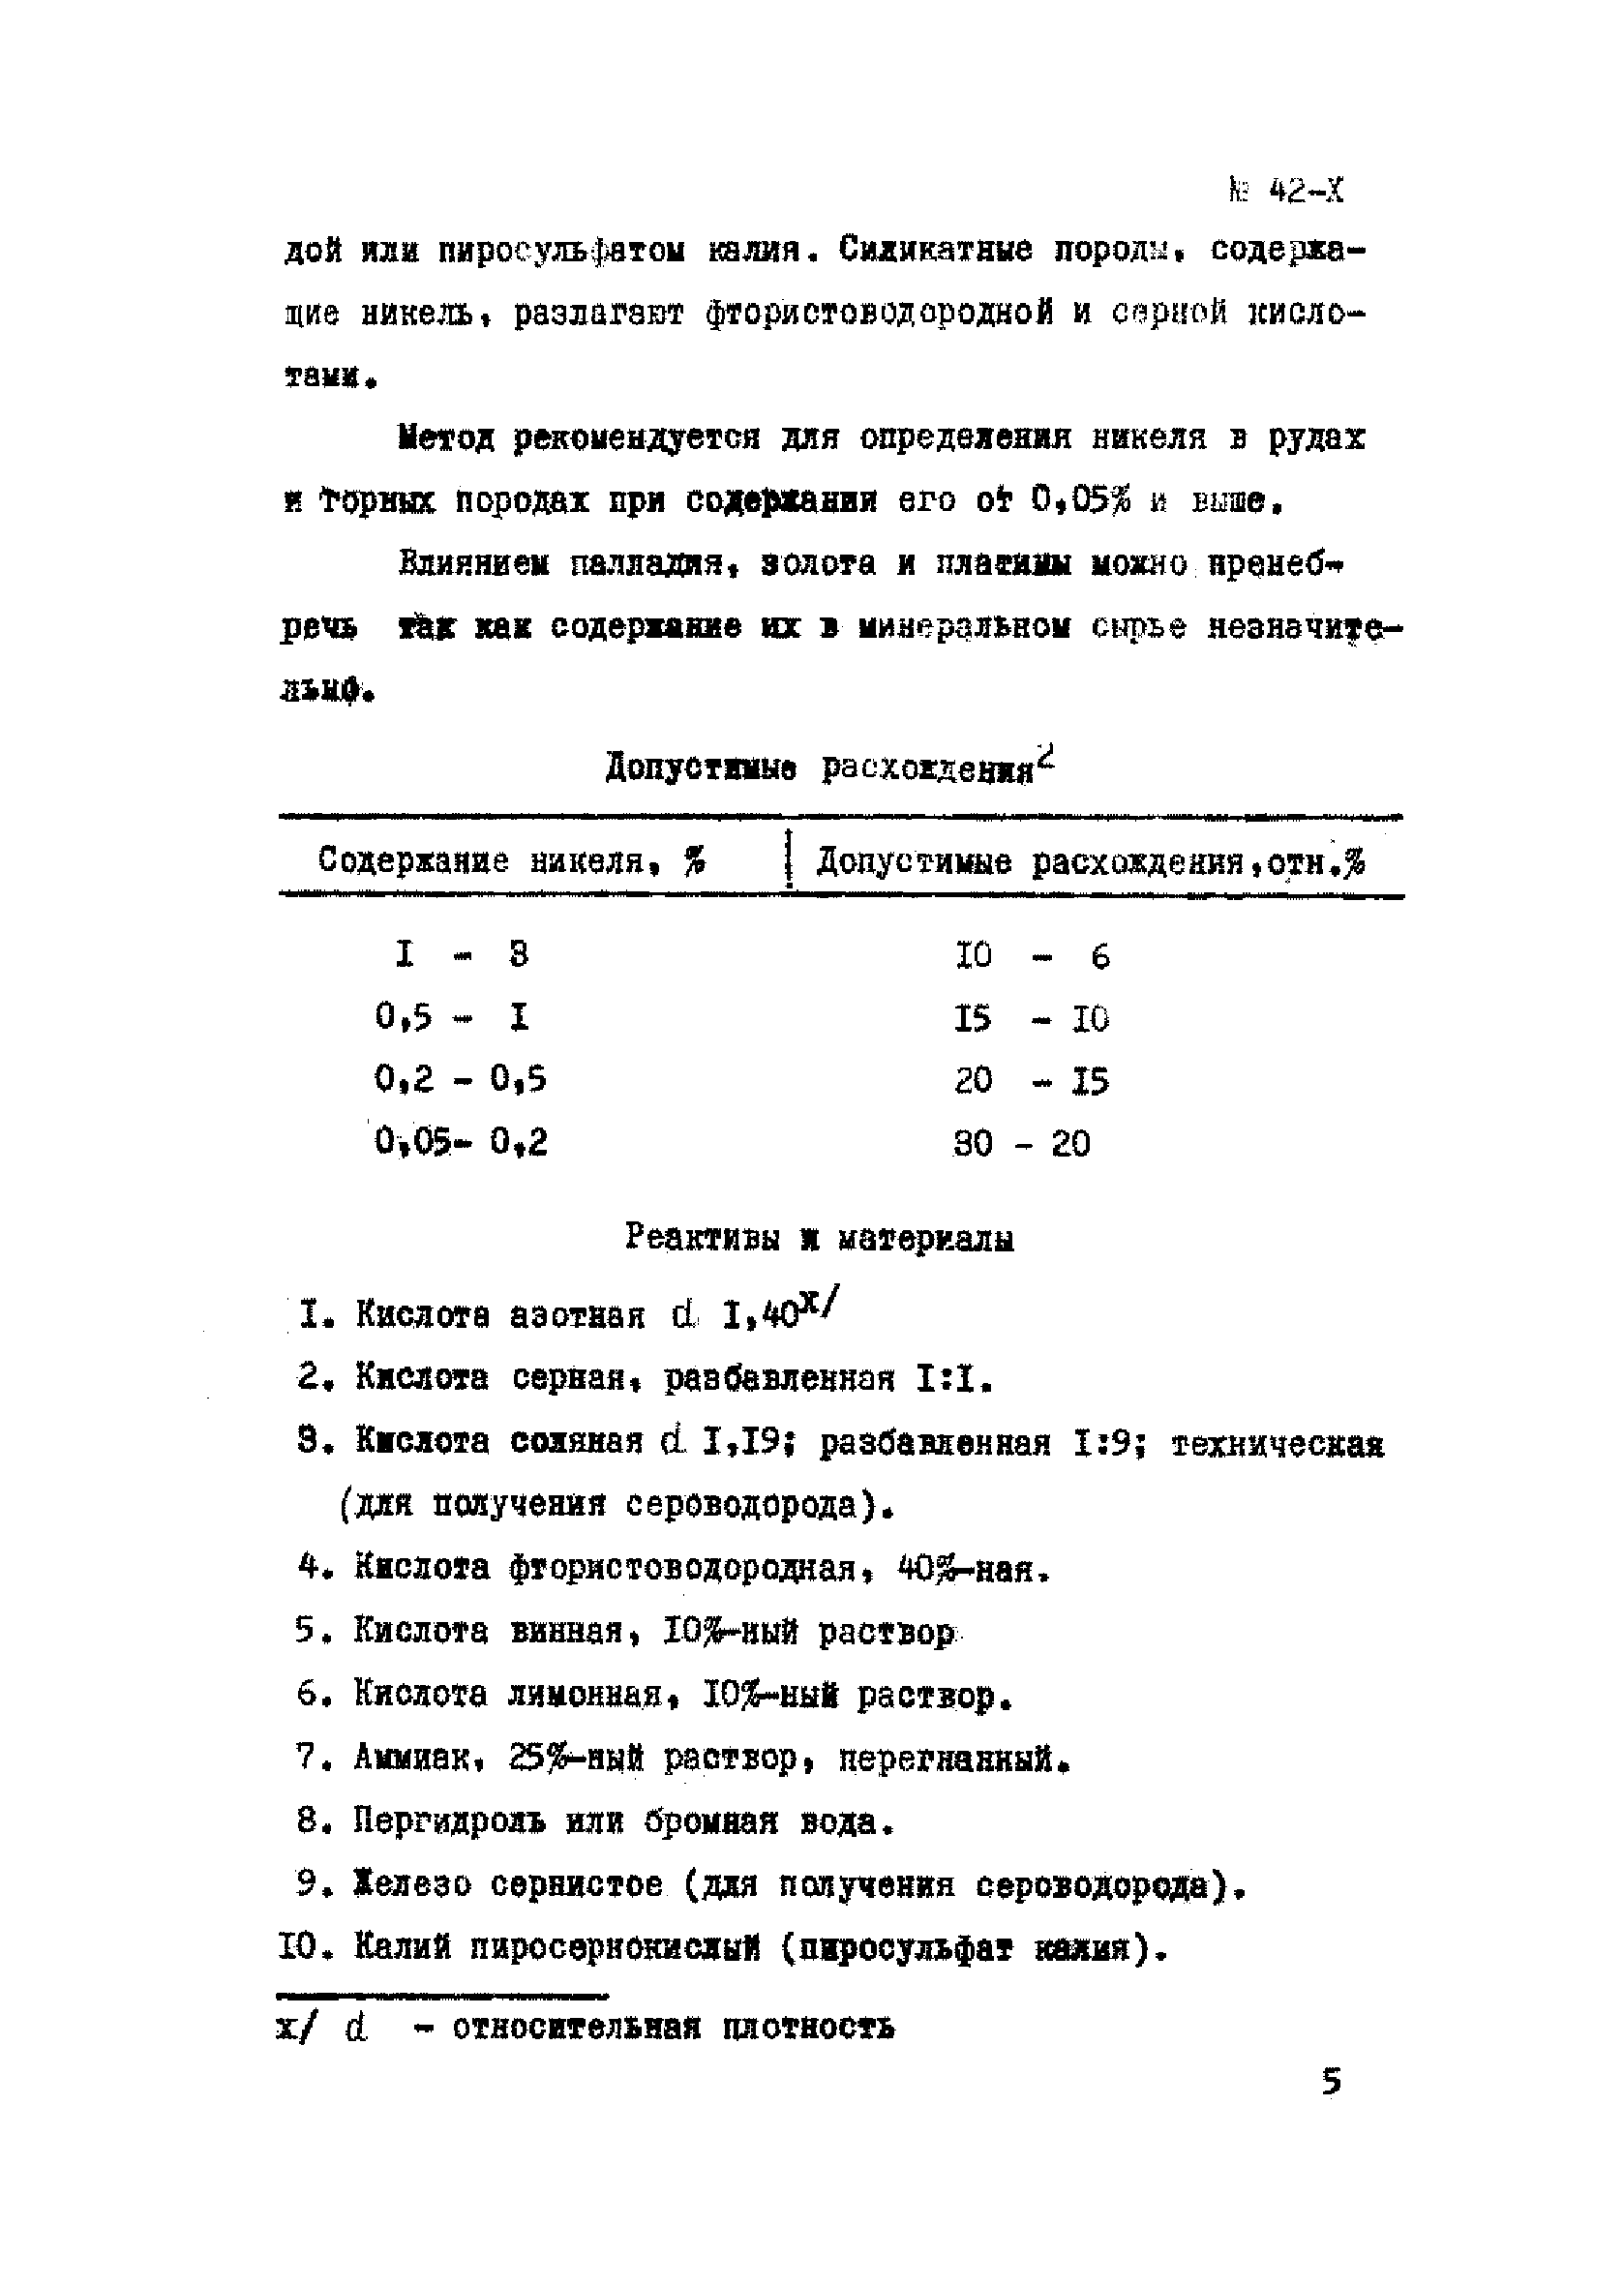 Инструкция НСАМ 42-Х